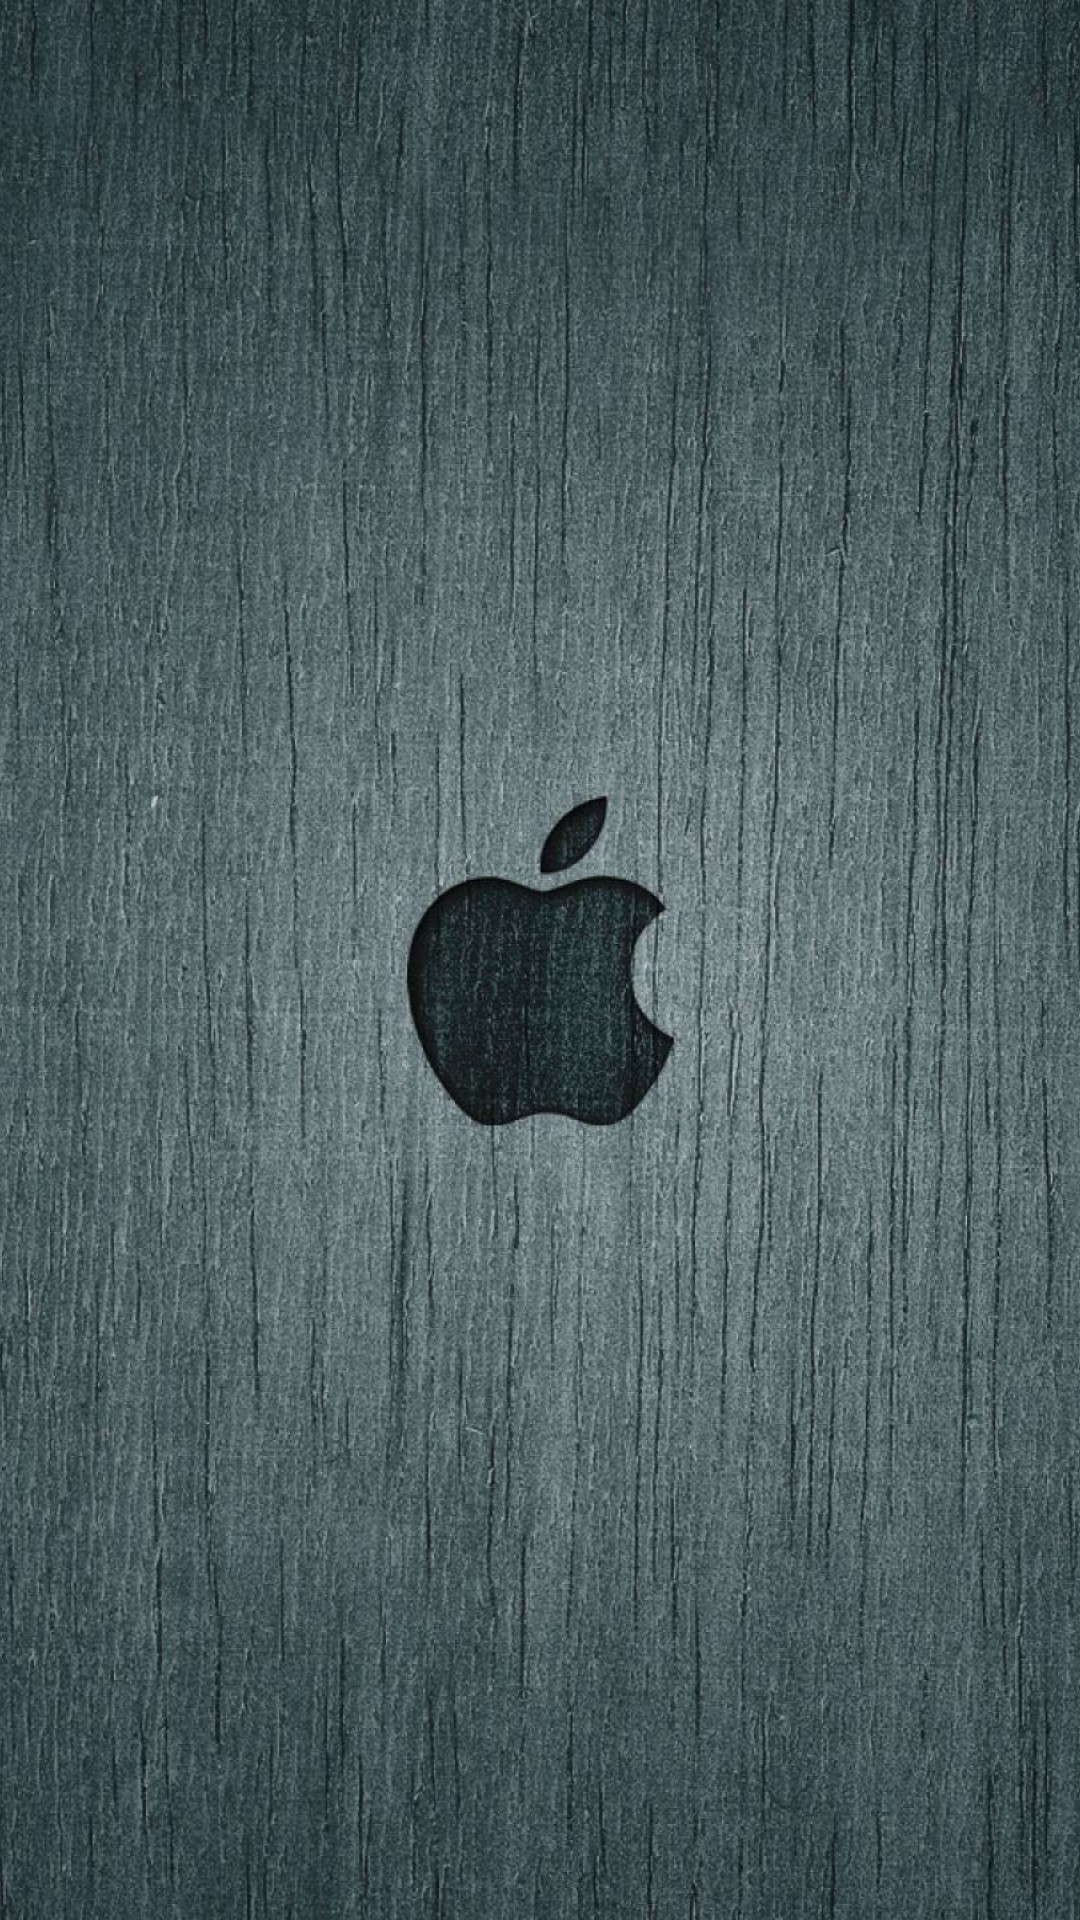 Grey Apple Logo Wallpaper for Desktop and Mobiles iPhone 6 / 6S Plus ...